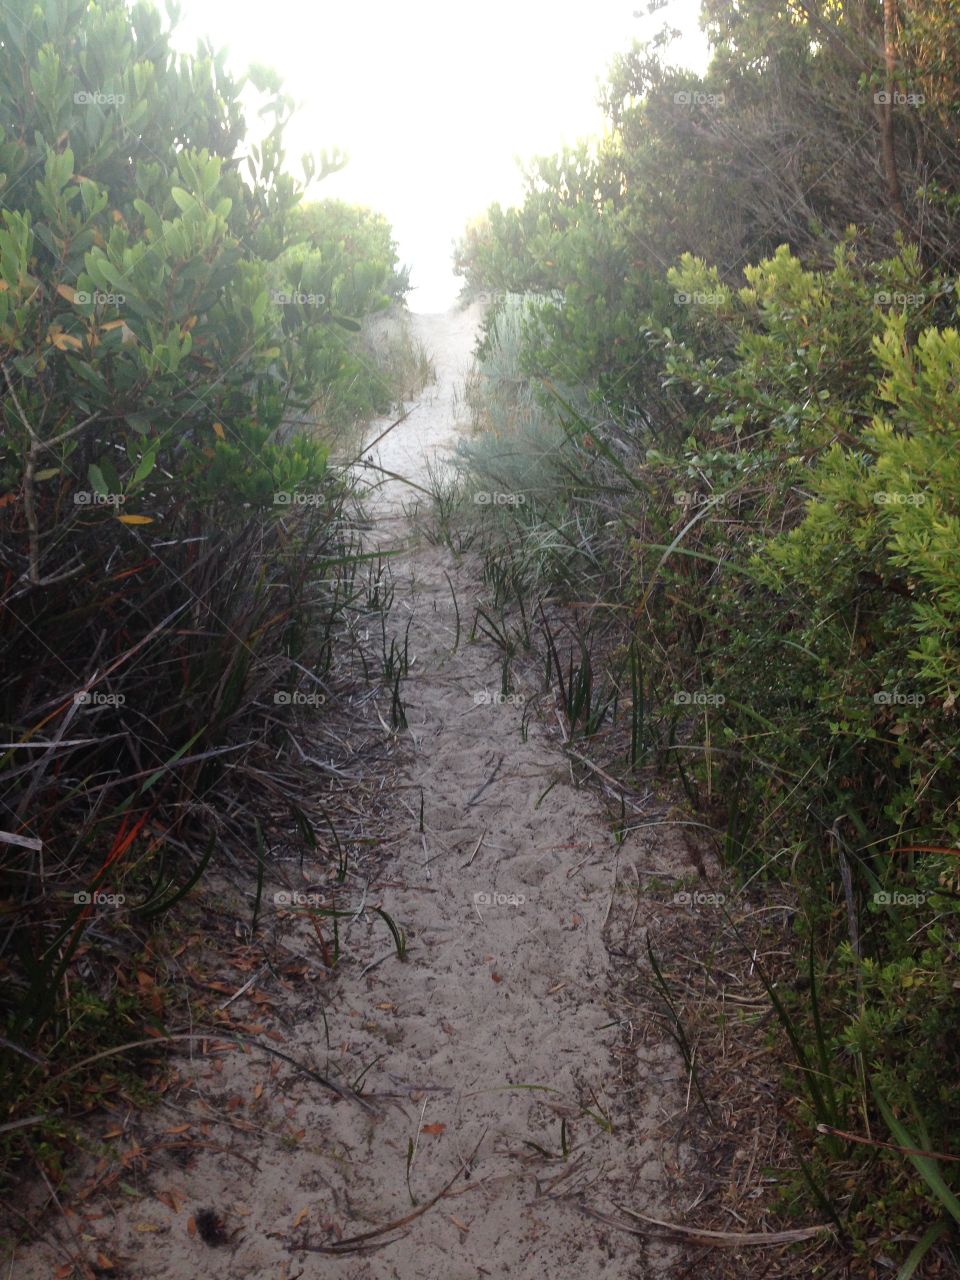 Path to isolated beach in Australia through sand dunes shrub